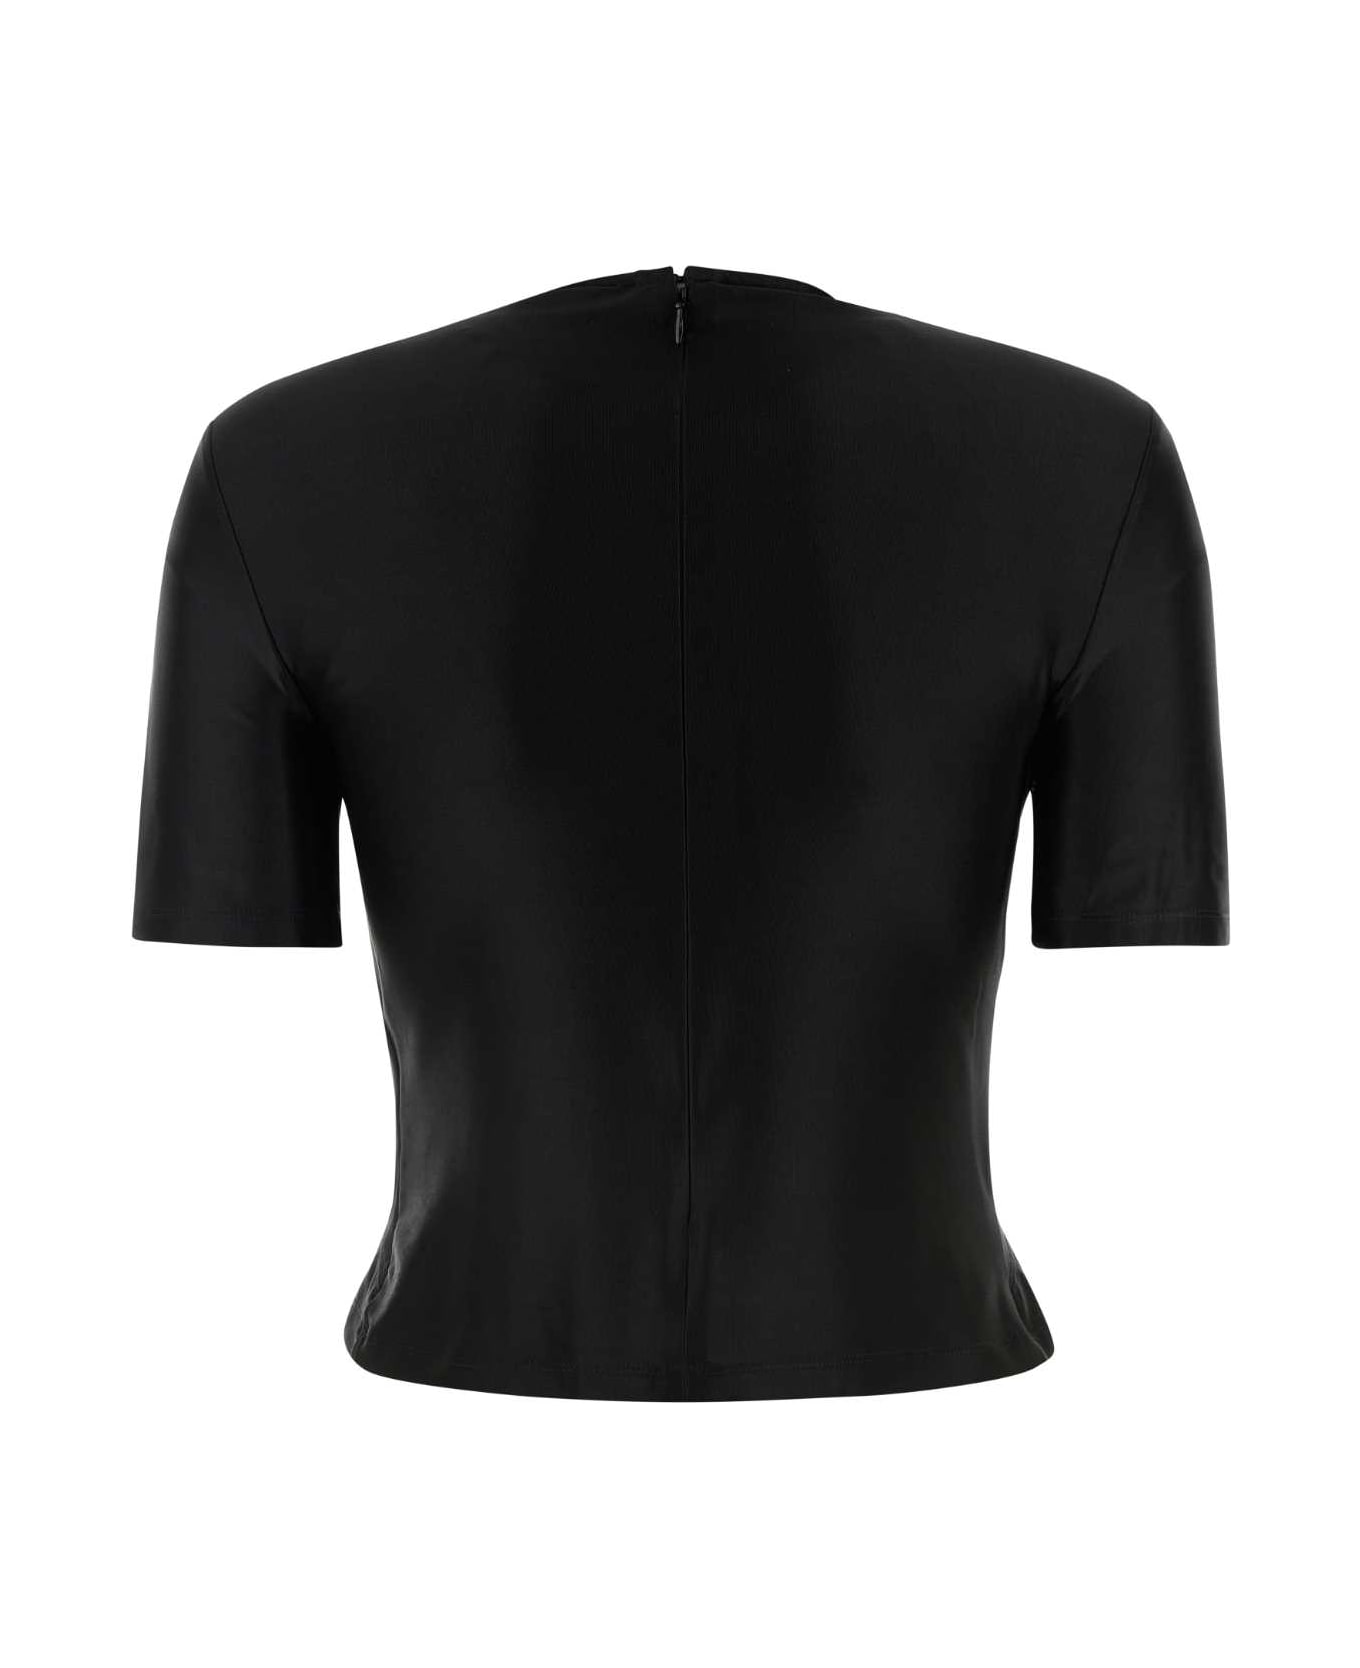 Paco Rabanne Black Stretch Viscose Top - BLACK Tシャツ